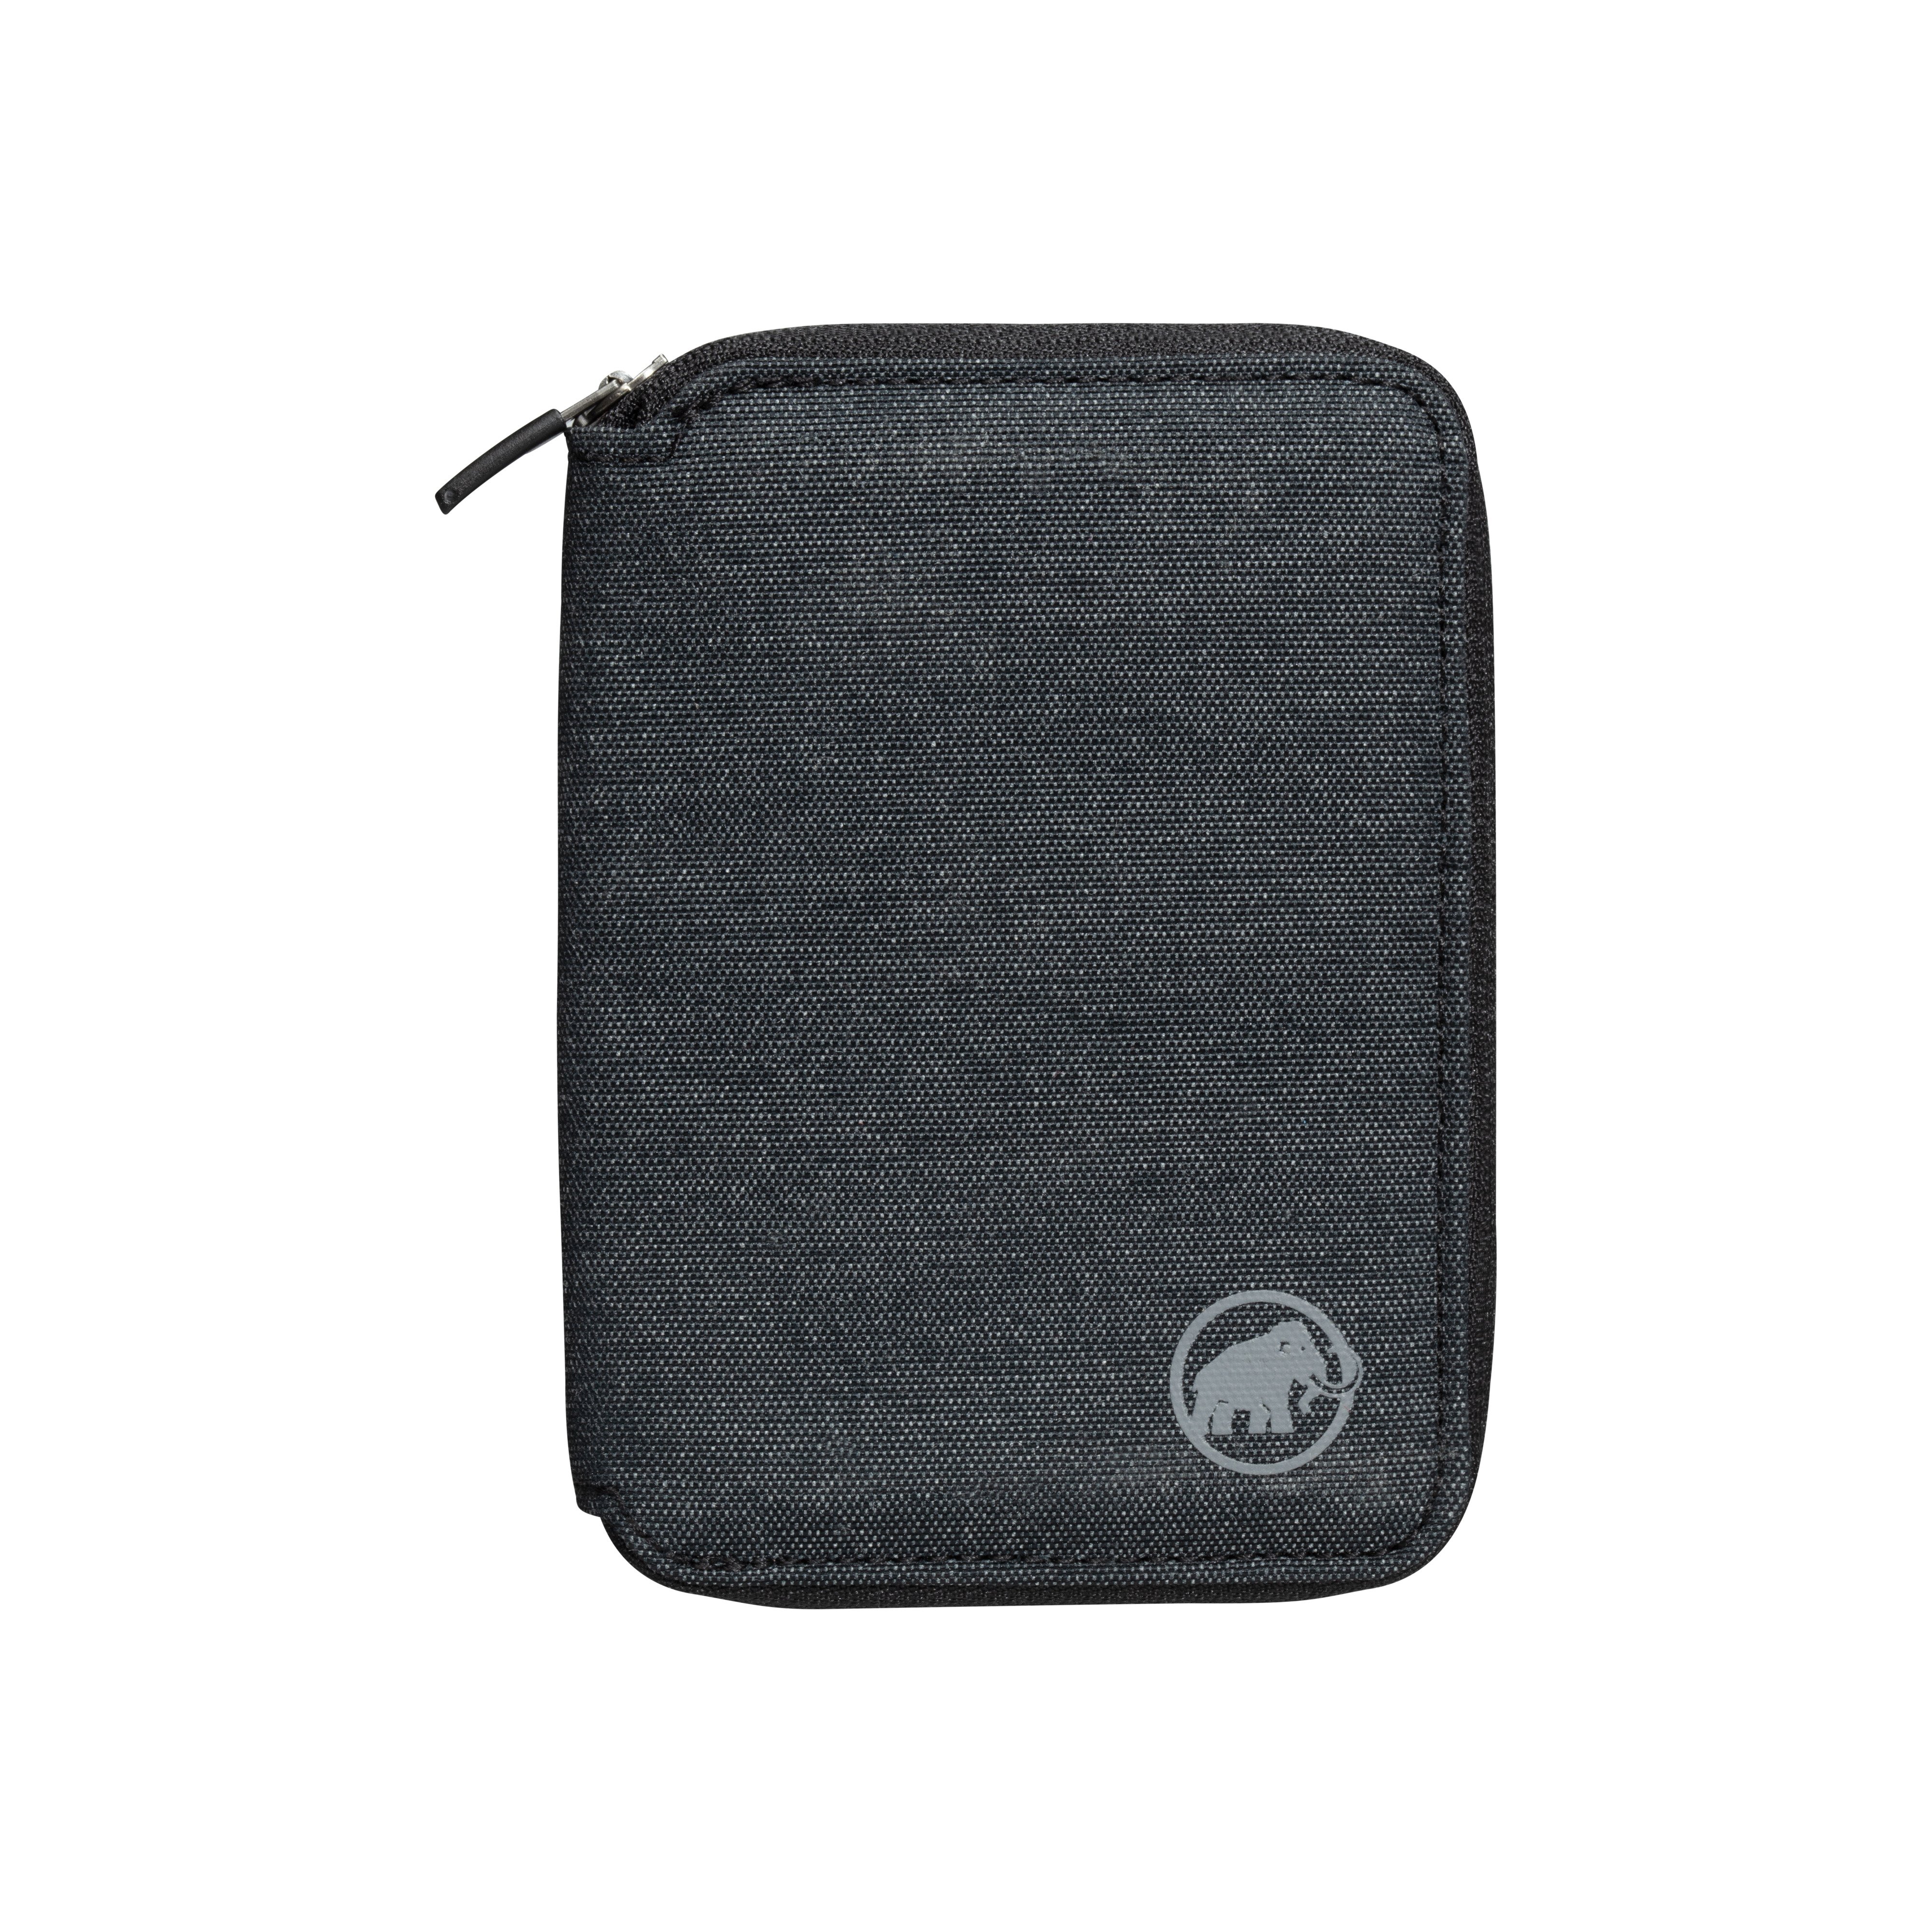 Zip Wallet Mélange - black, one size product image